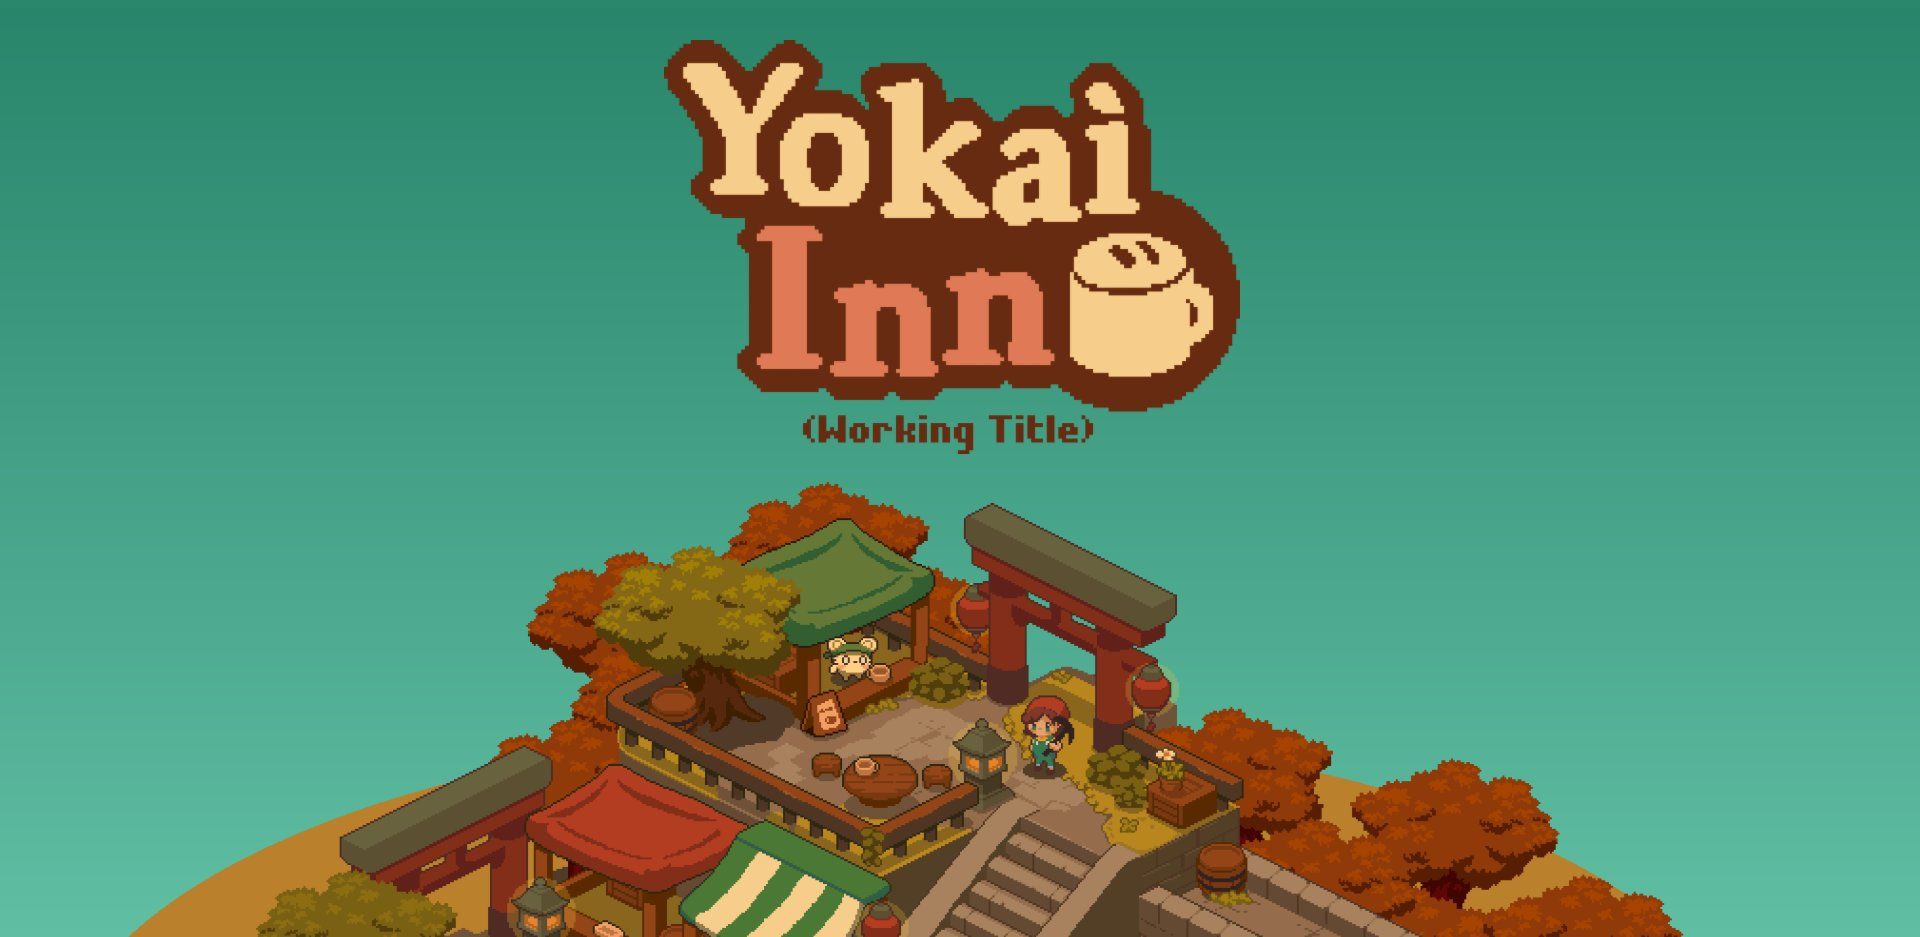 Title card from early development of Yokai Inn